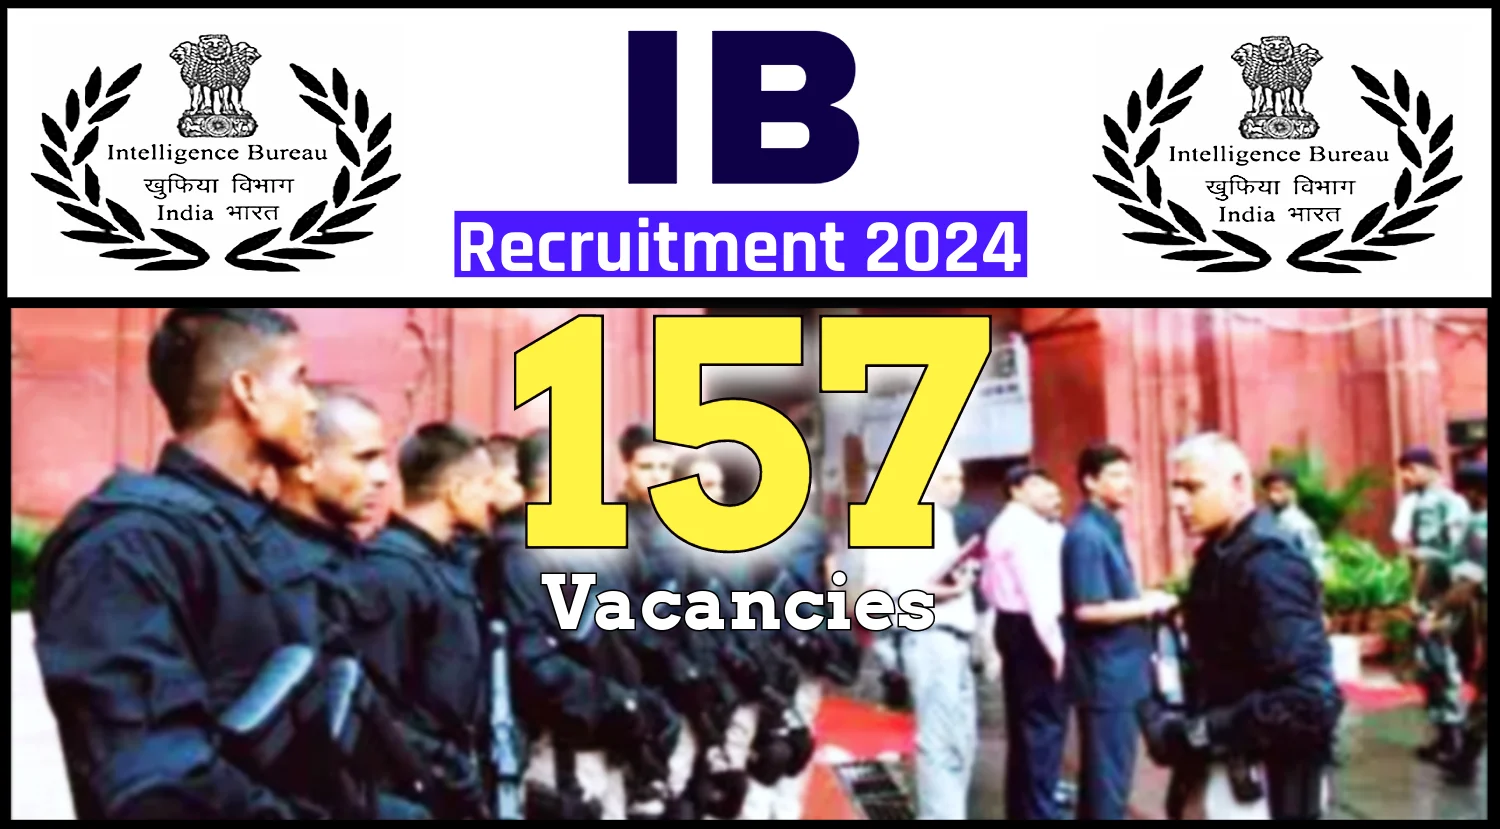 IB Recruitment 2024